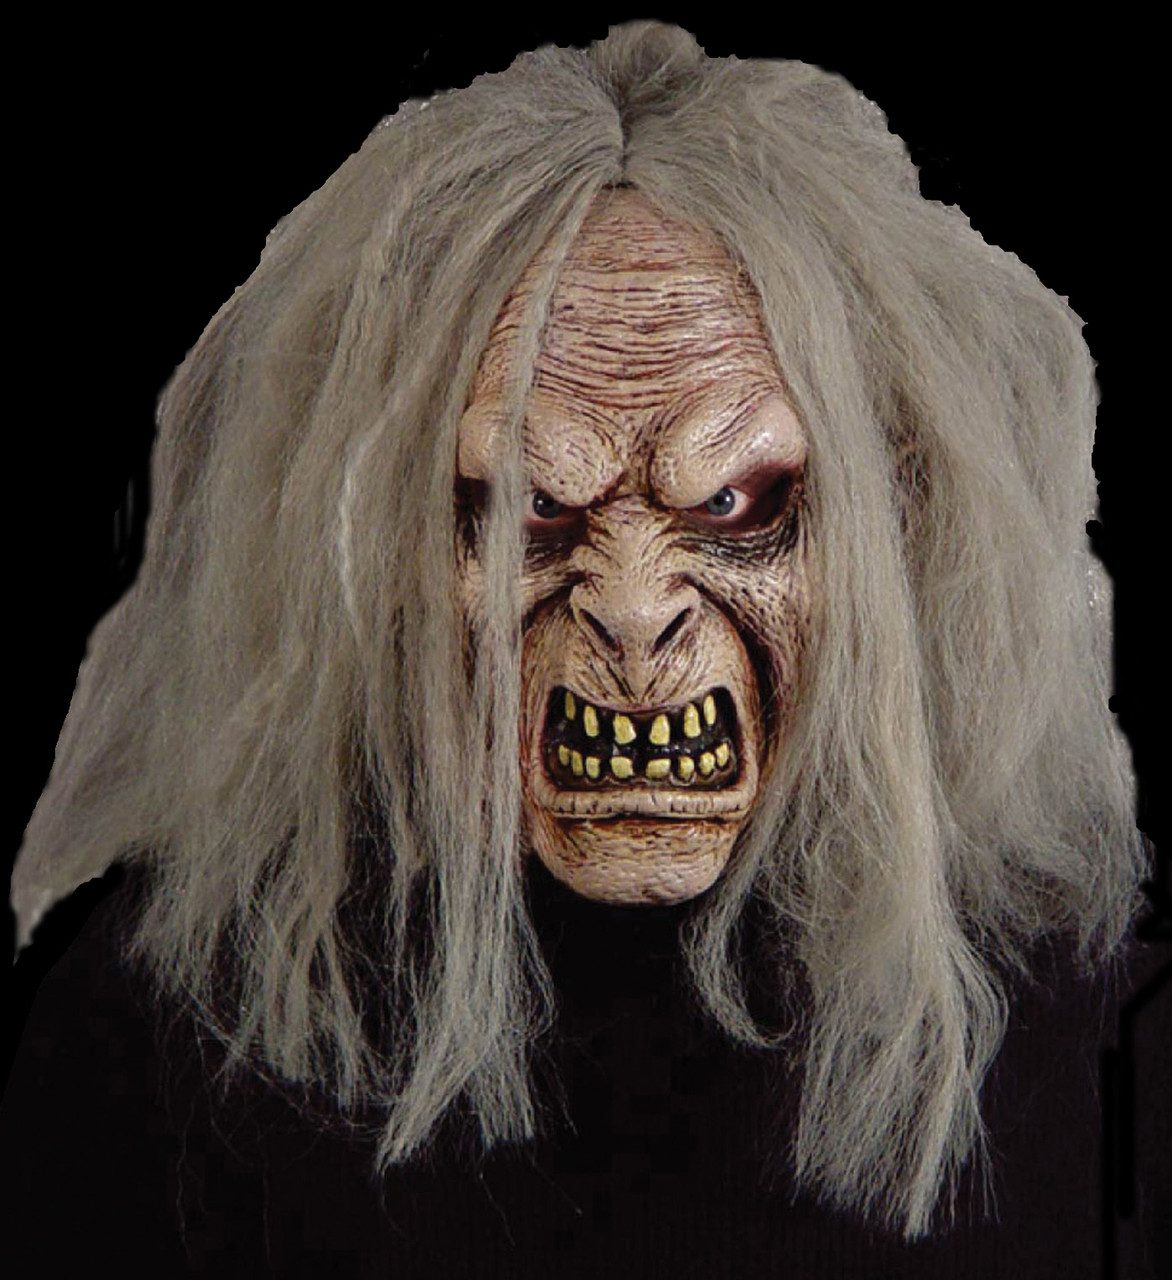 Shadow Cpreeps Berzerker Creeper Monster Halloween Mask Costume